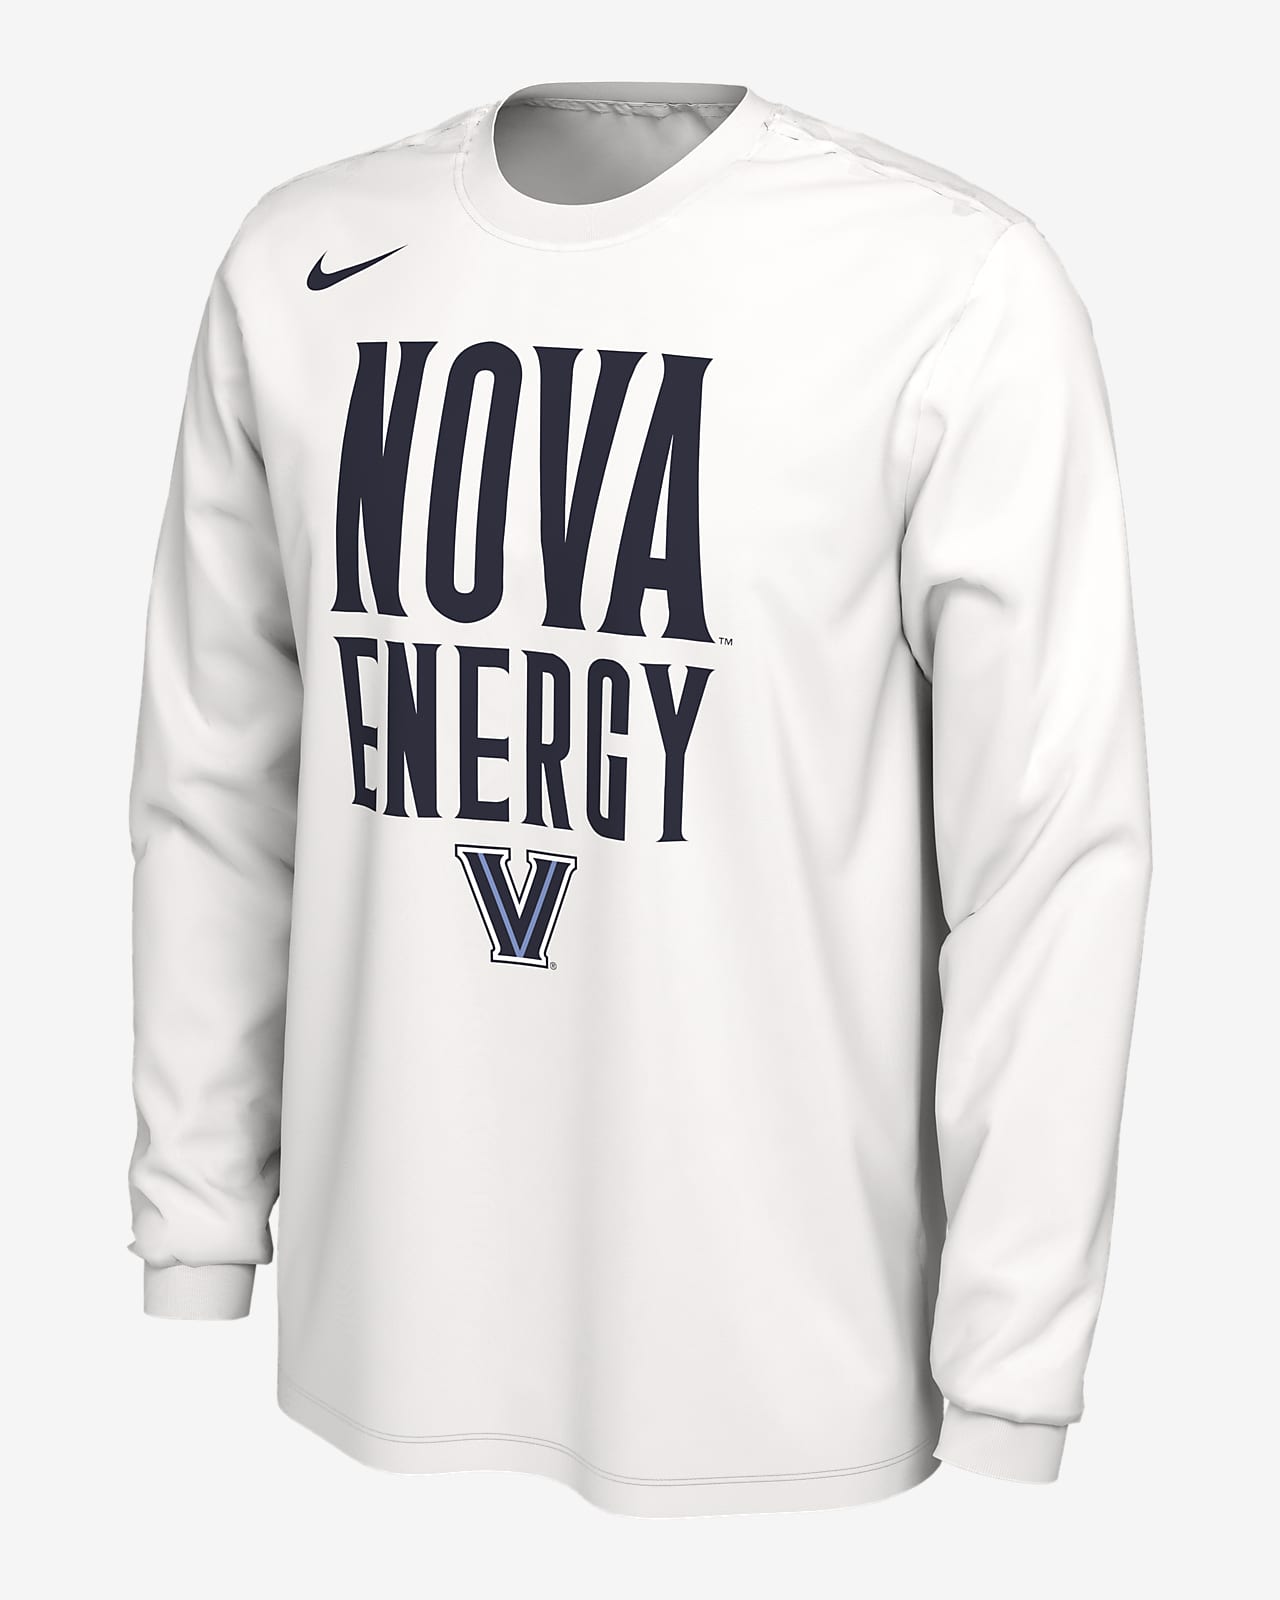 Villanova Men's Nike College Long-Sleeve T-Shirt